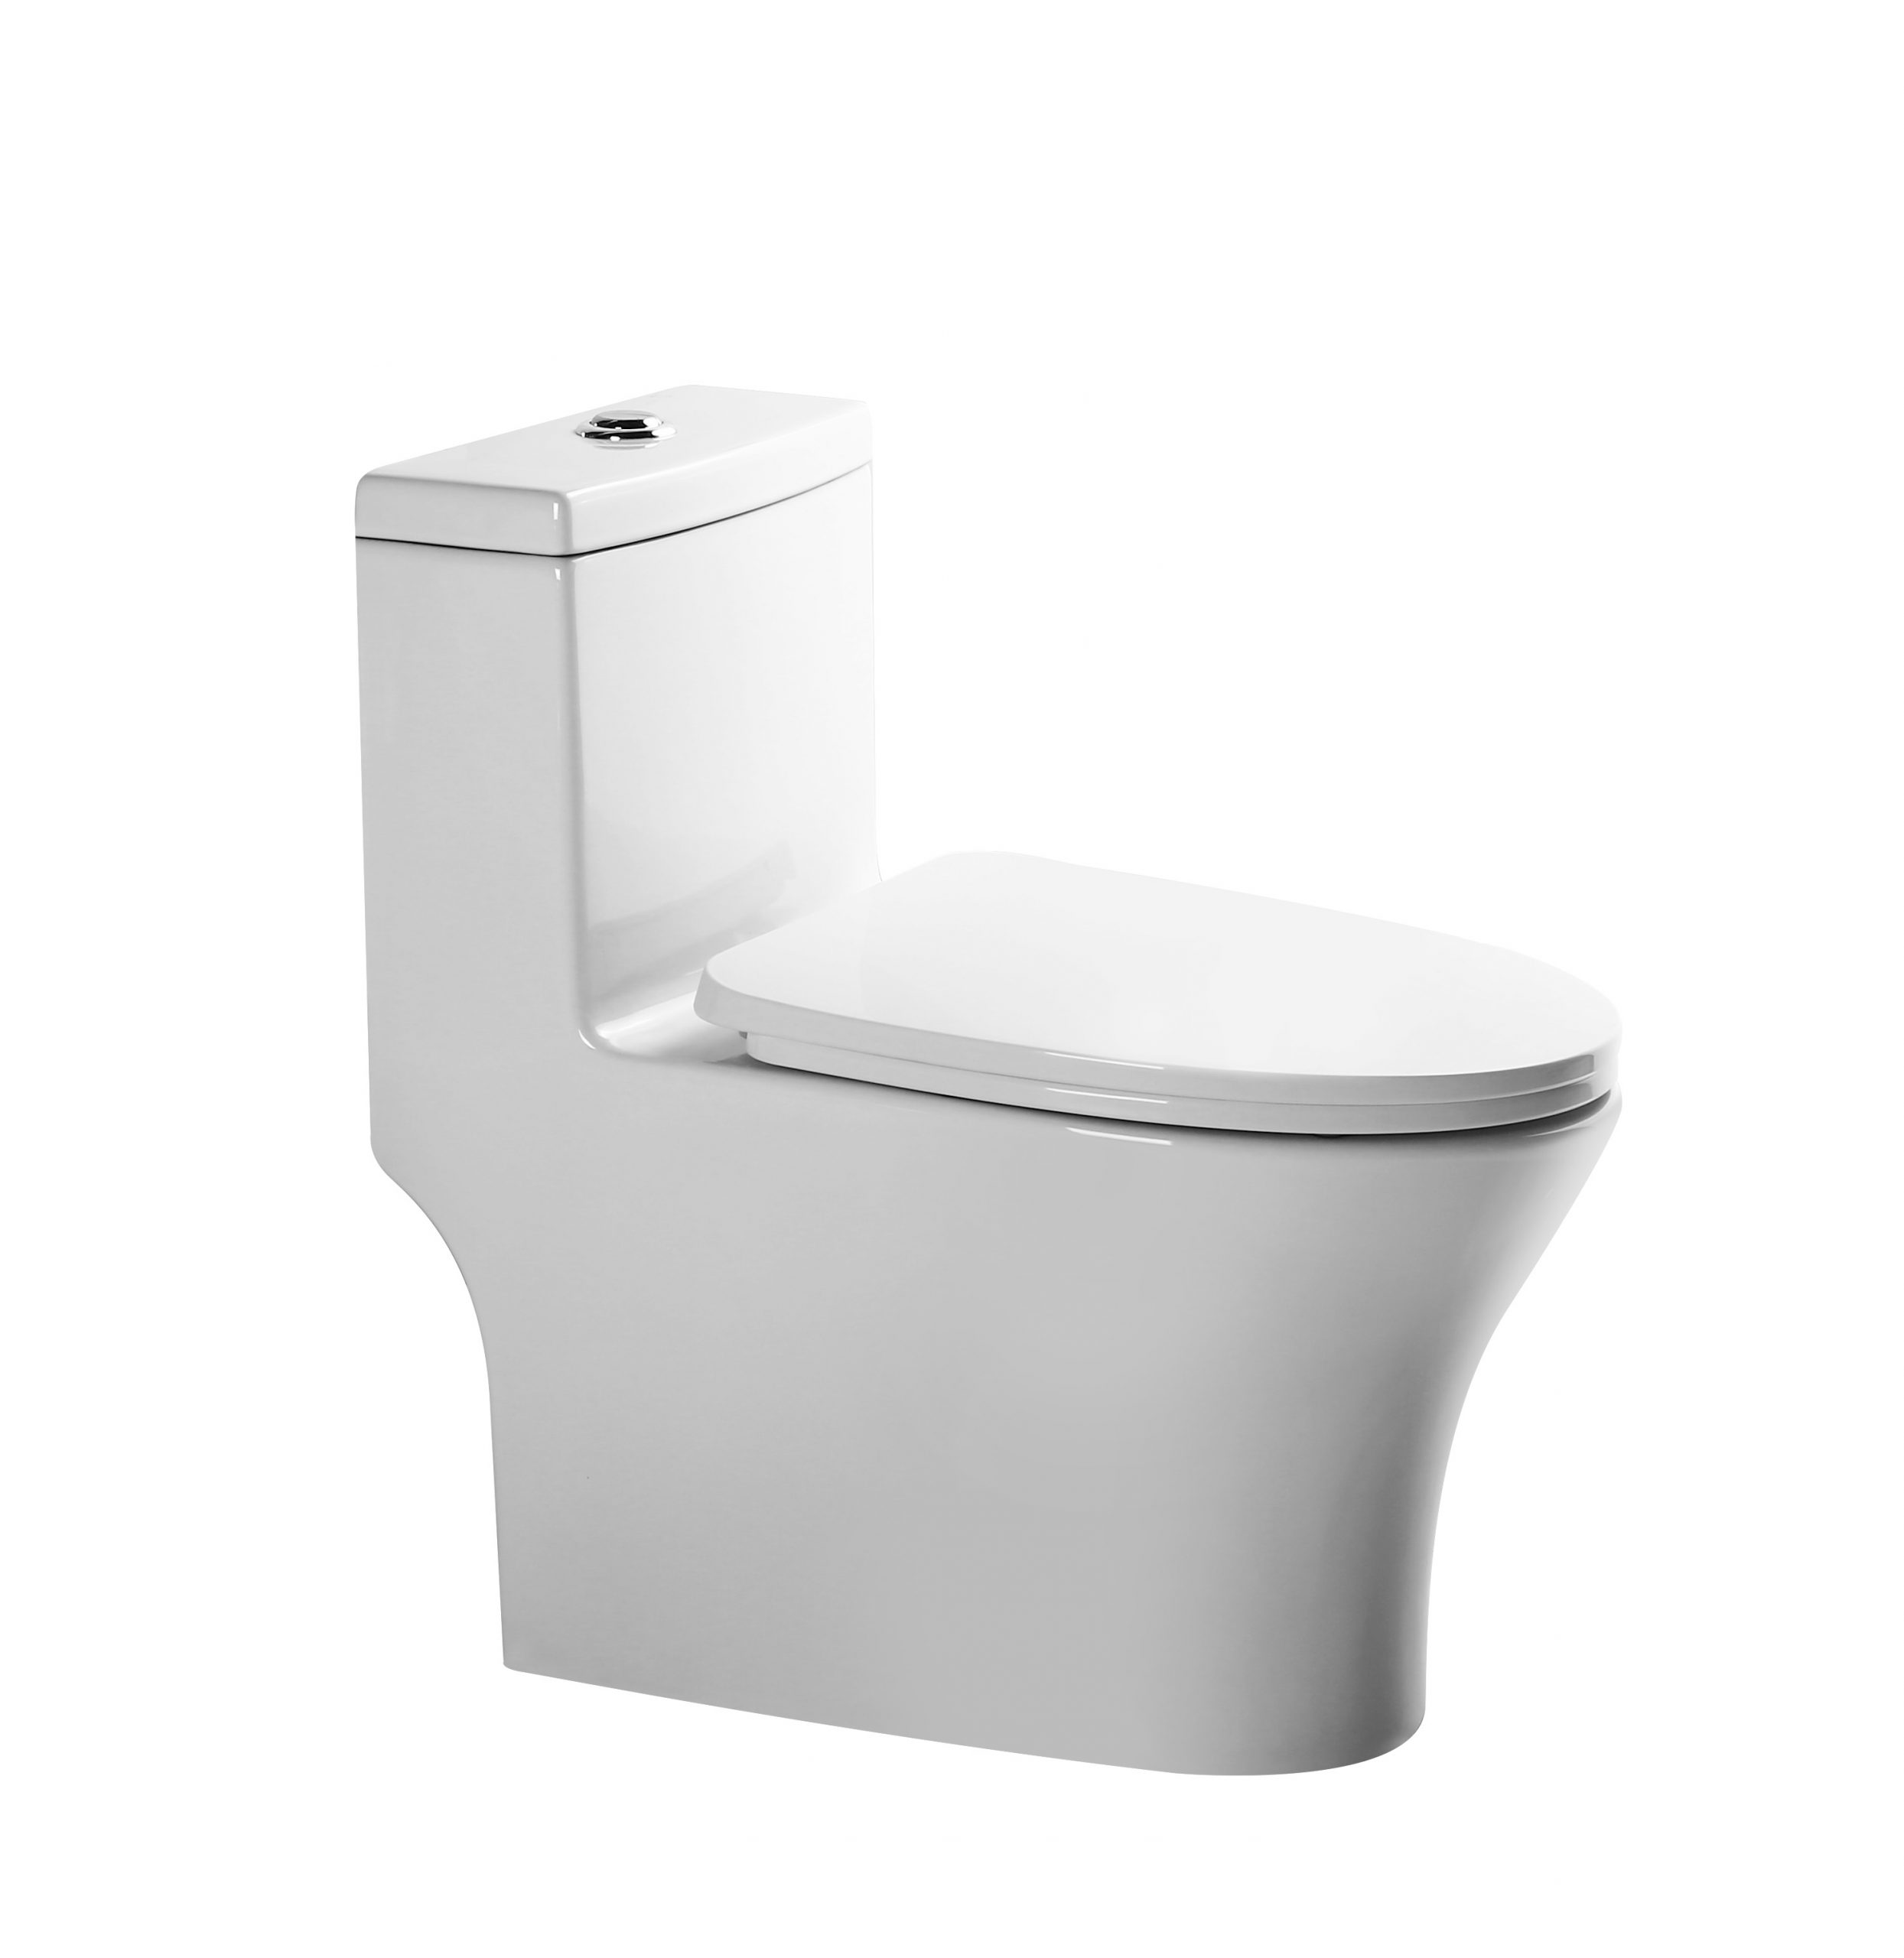 Latin America WC Bathroom Inodoro banos sanitario One-Piece Elongated  Toilet ORTONBATH™ Dual-Flush 3.3/4.8L PER FLUSH OTM001 - Orton Baths